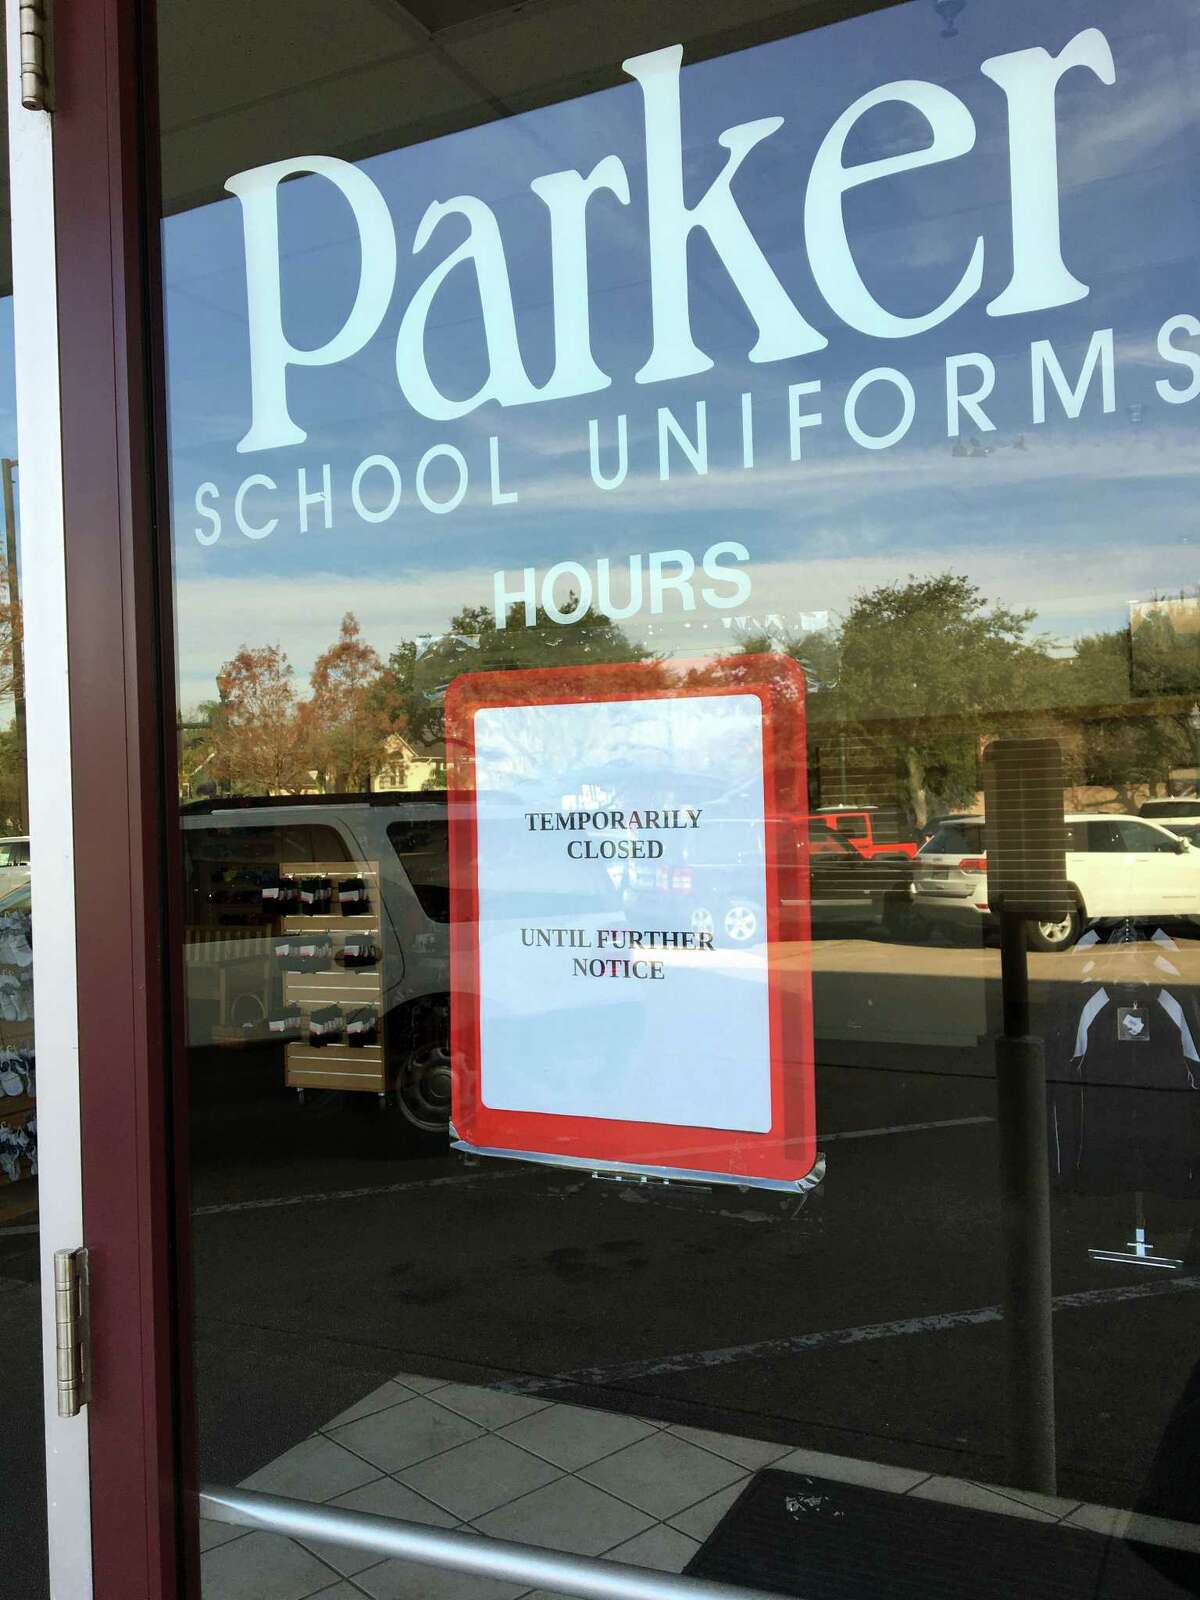 Francis Parker School - Need uniforms? Buy any Lands' End school